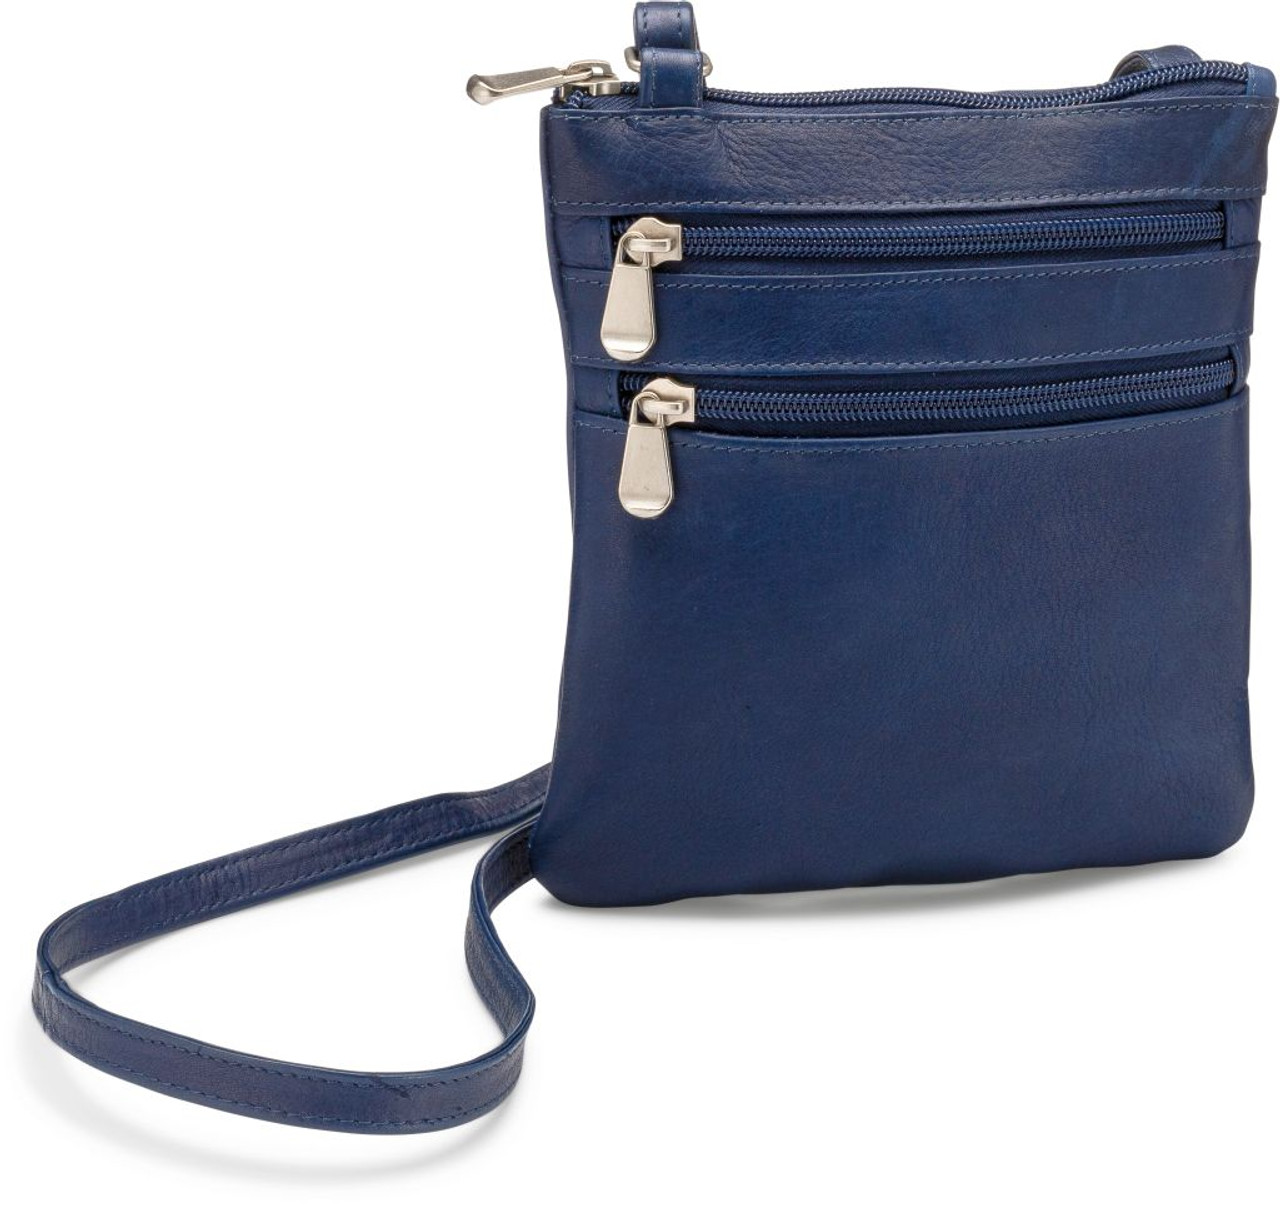 New Winter BUMBAG Pockets 2019 Brand Fashion Designer Bags Teddy Bags  M55425 Handbags Wallet Women Crossbody Bag 01 From Luxurydesigner001,  $184.04